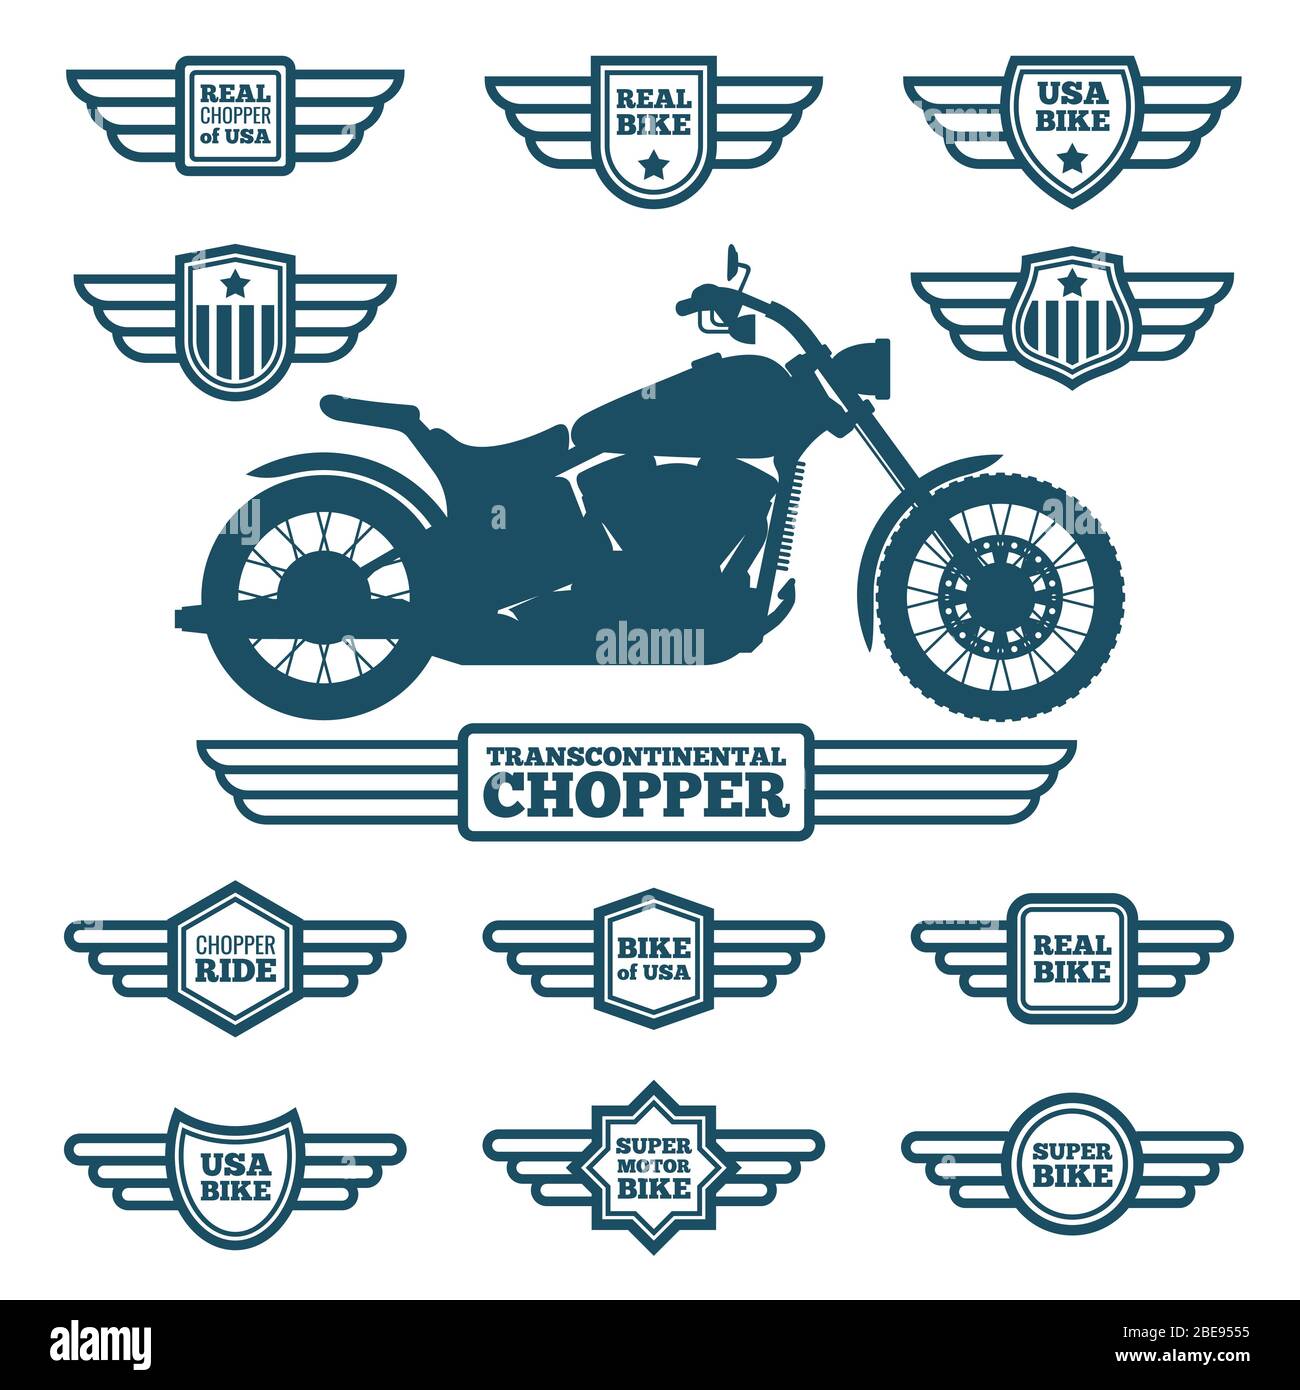 Logos Imagenes De Chopper